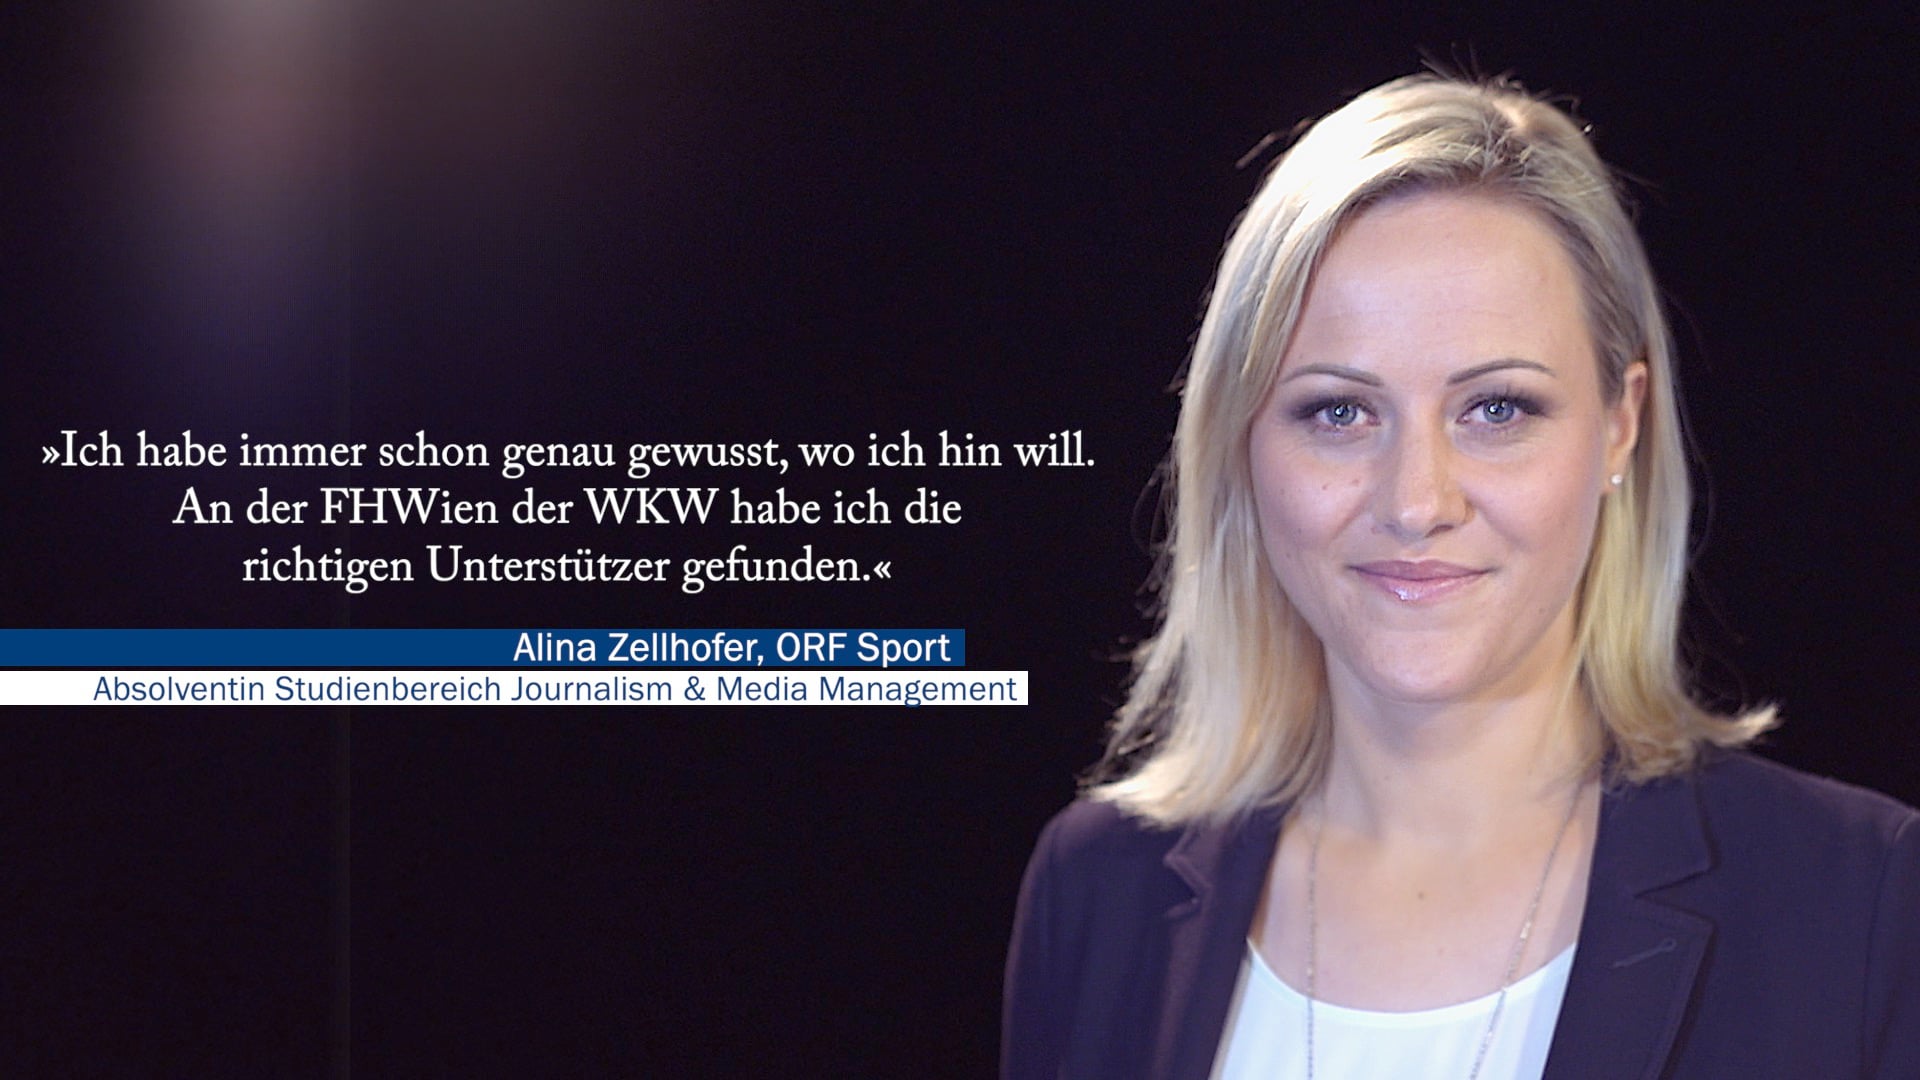 Journalism & Media Management - Alina Zellhofer